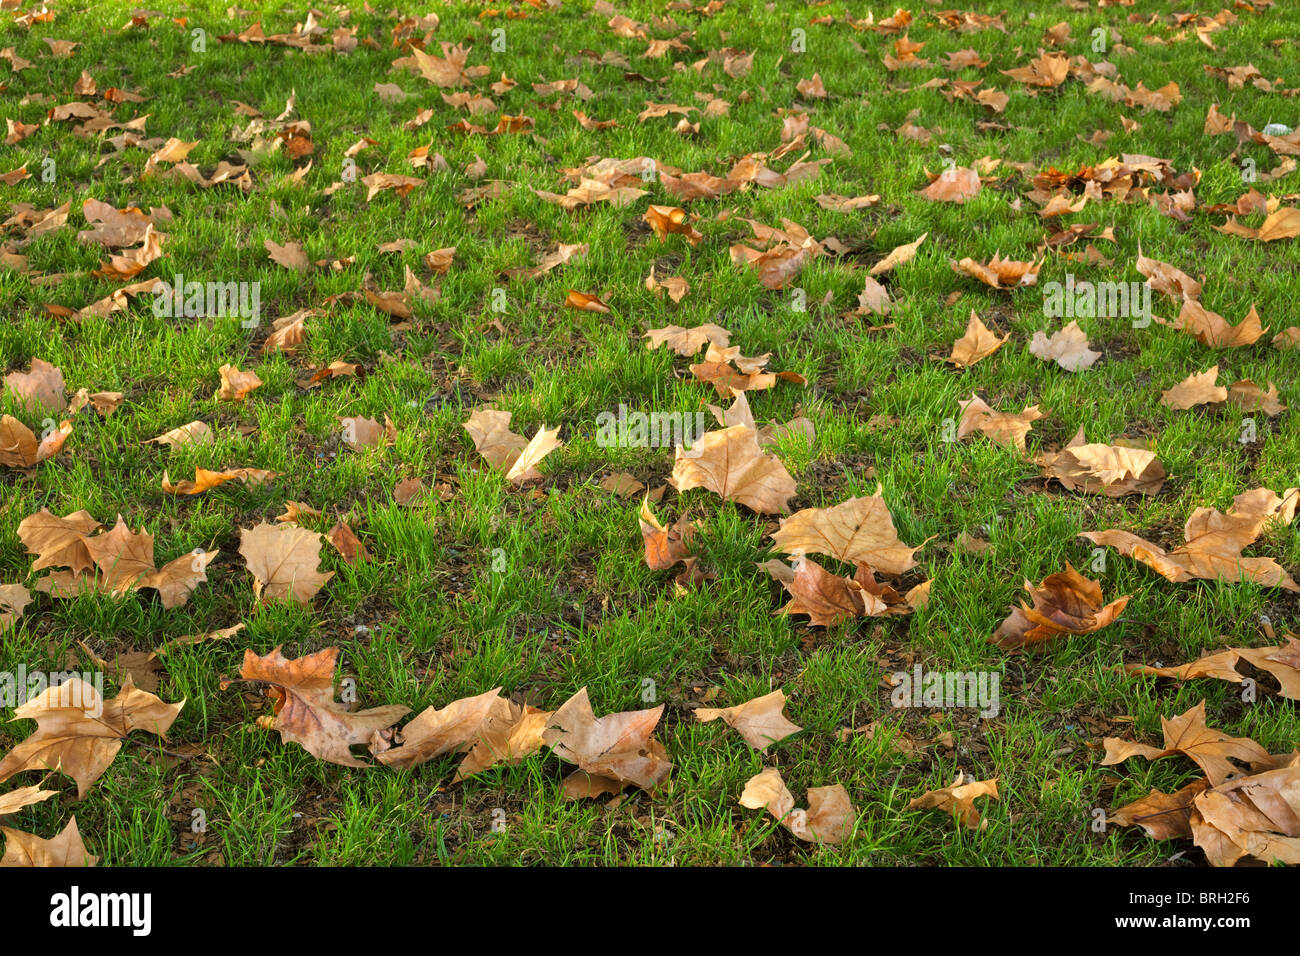 plane tree fallen leaves on park grass Stock Photo